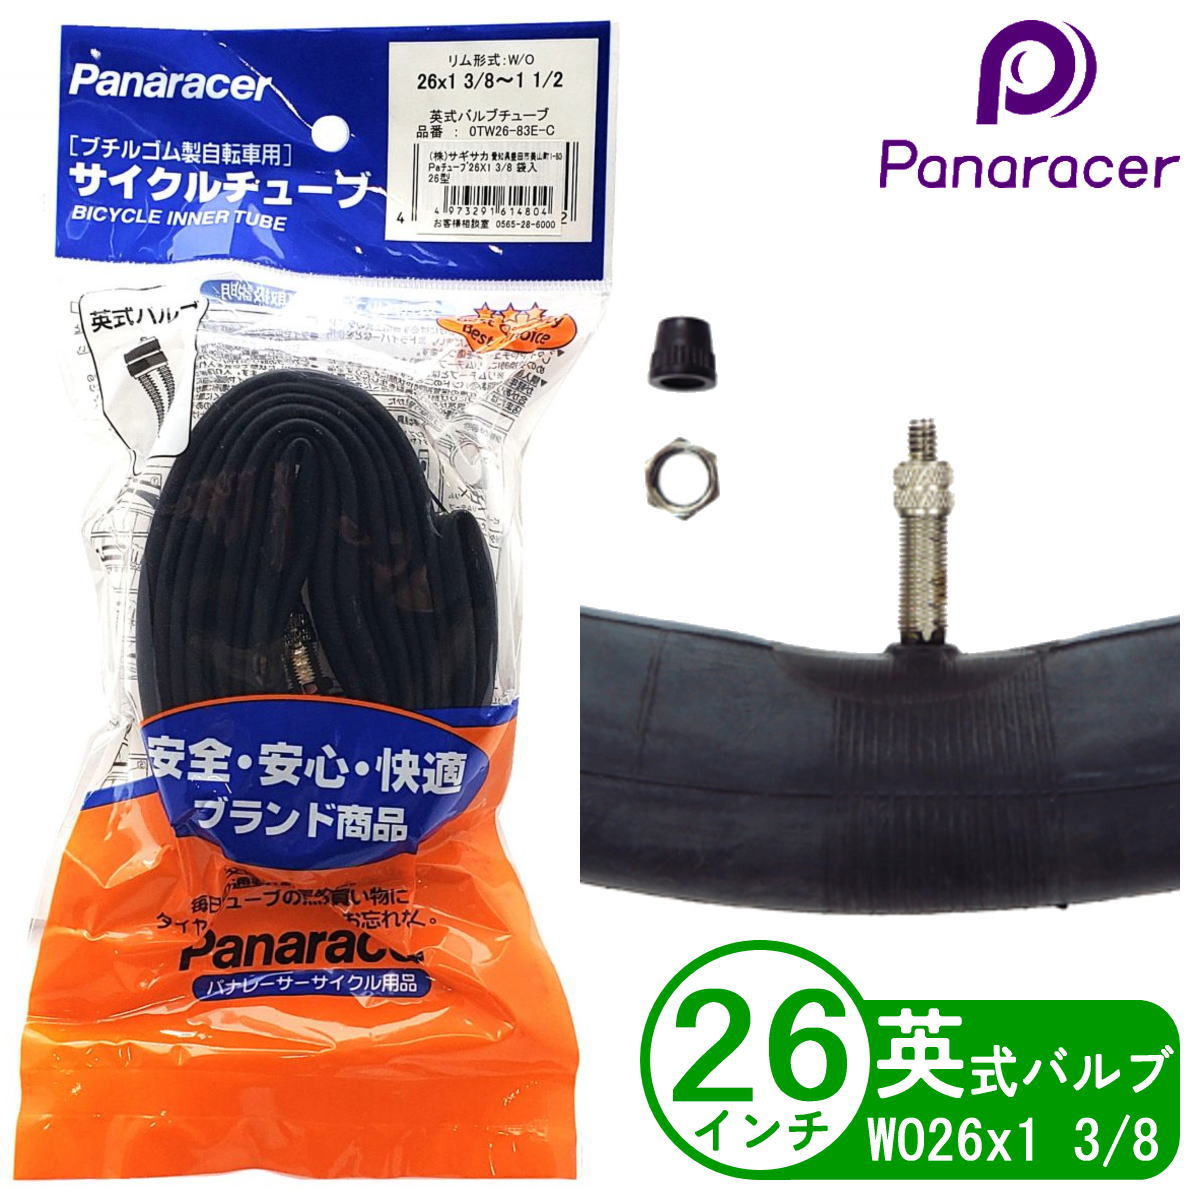 Panaracer(パナレーサー) チューブ 26X3/8 英式 袋入 Panaracer WOリム用チューブ 26X3/8 英式バルブ